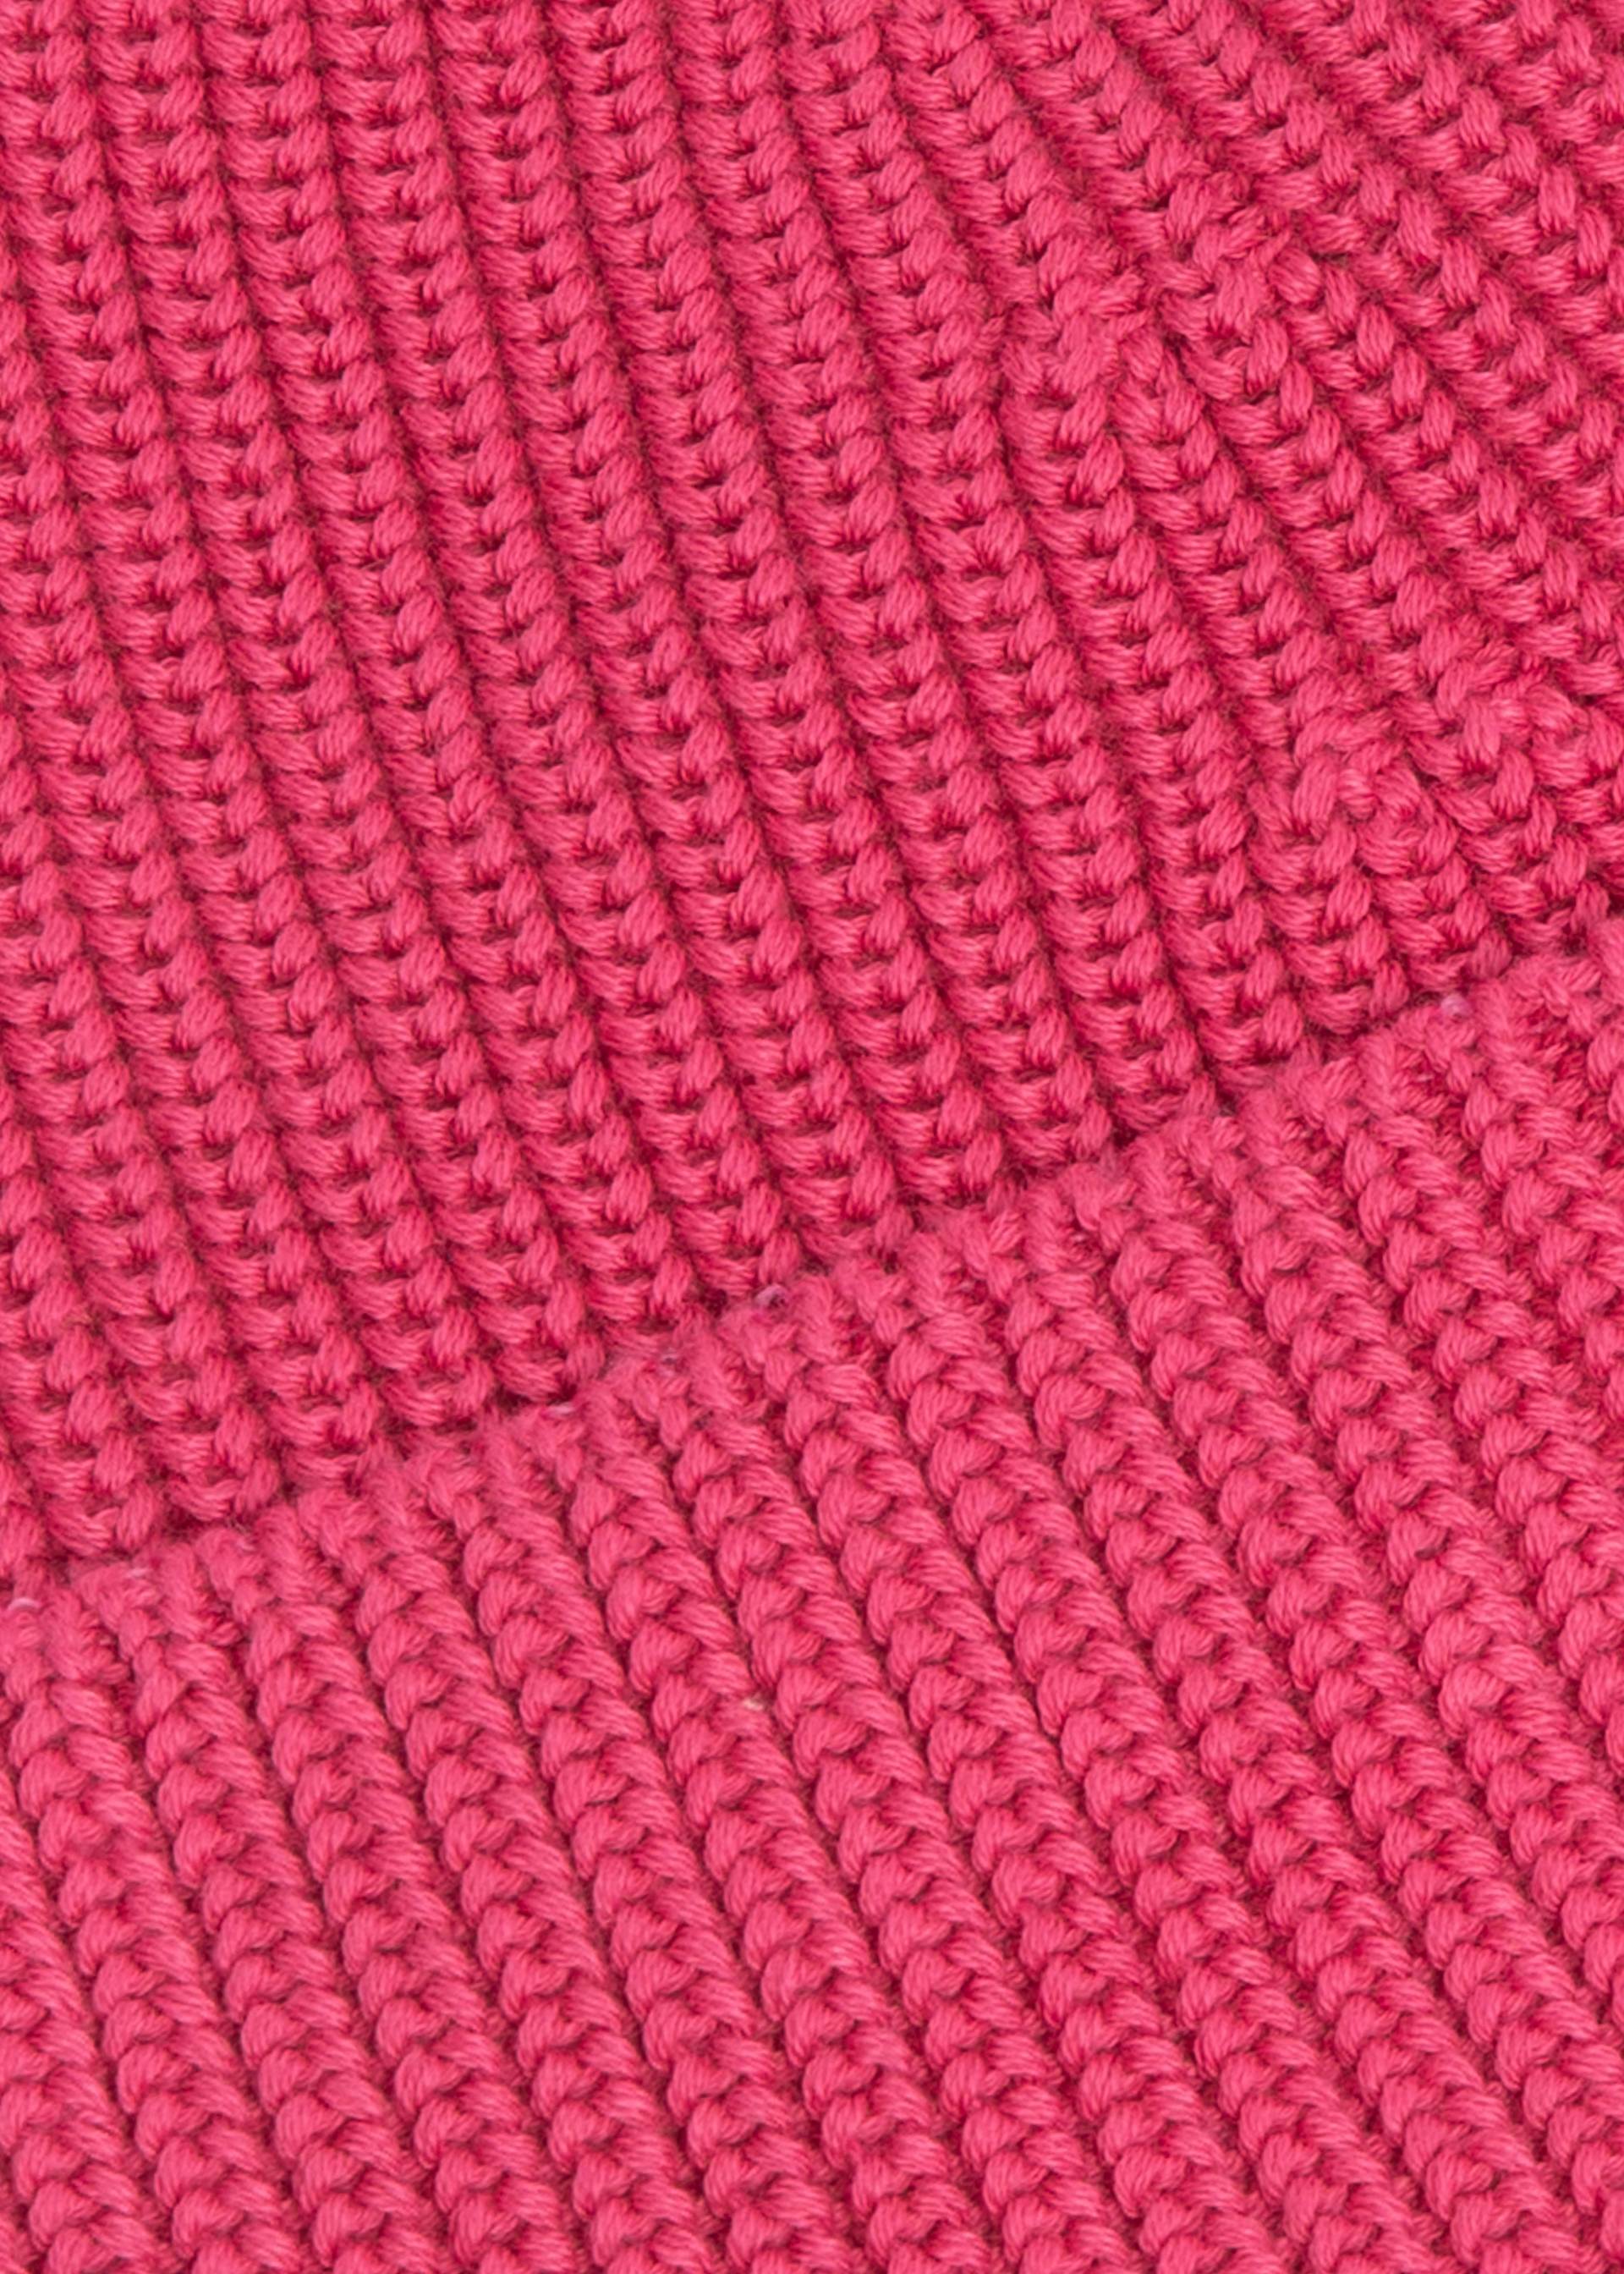 Strickmütze Beanie Queen, shades of pink knit, Accessoires, Rosa